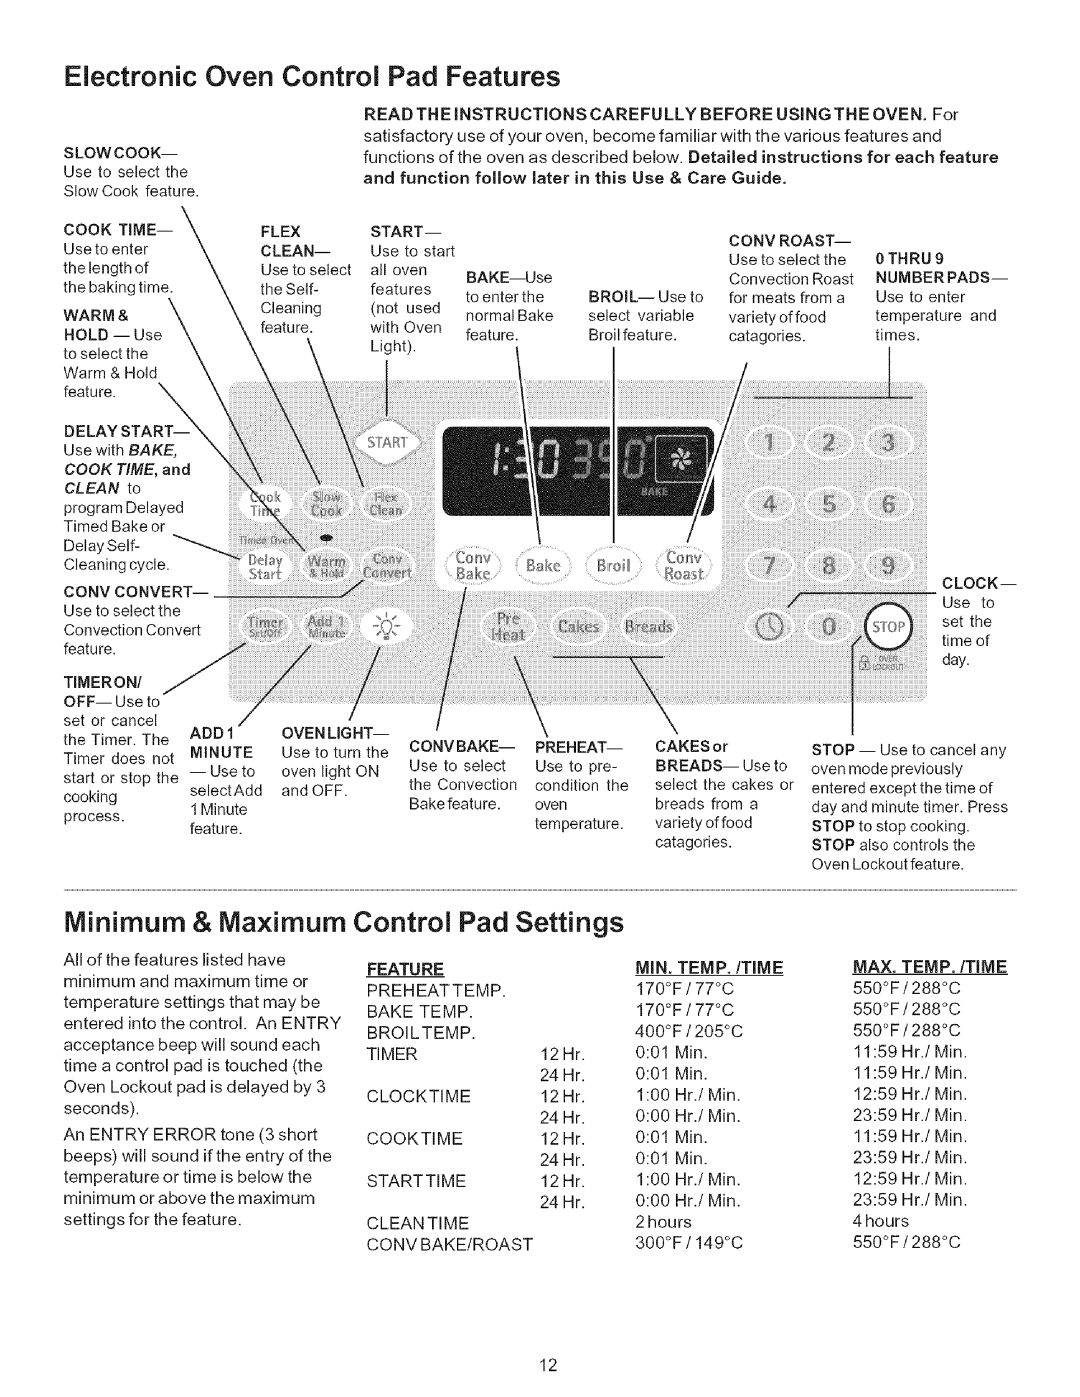 Kenmore 790.7943 manual Electronic Oven Control Pad Features, Minimum & Maximum, Control Pad Settings, Min. Temp./Time 